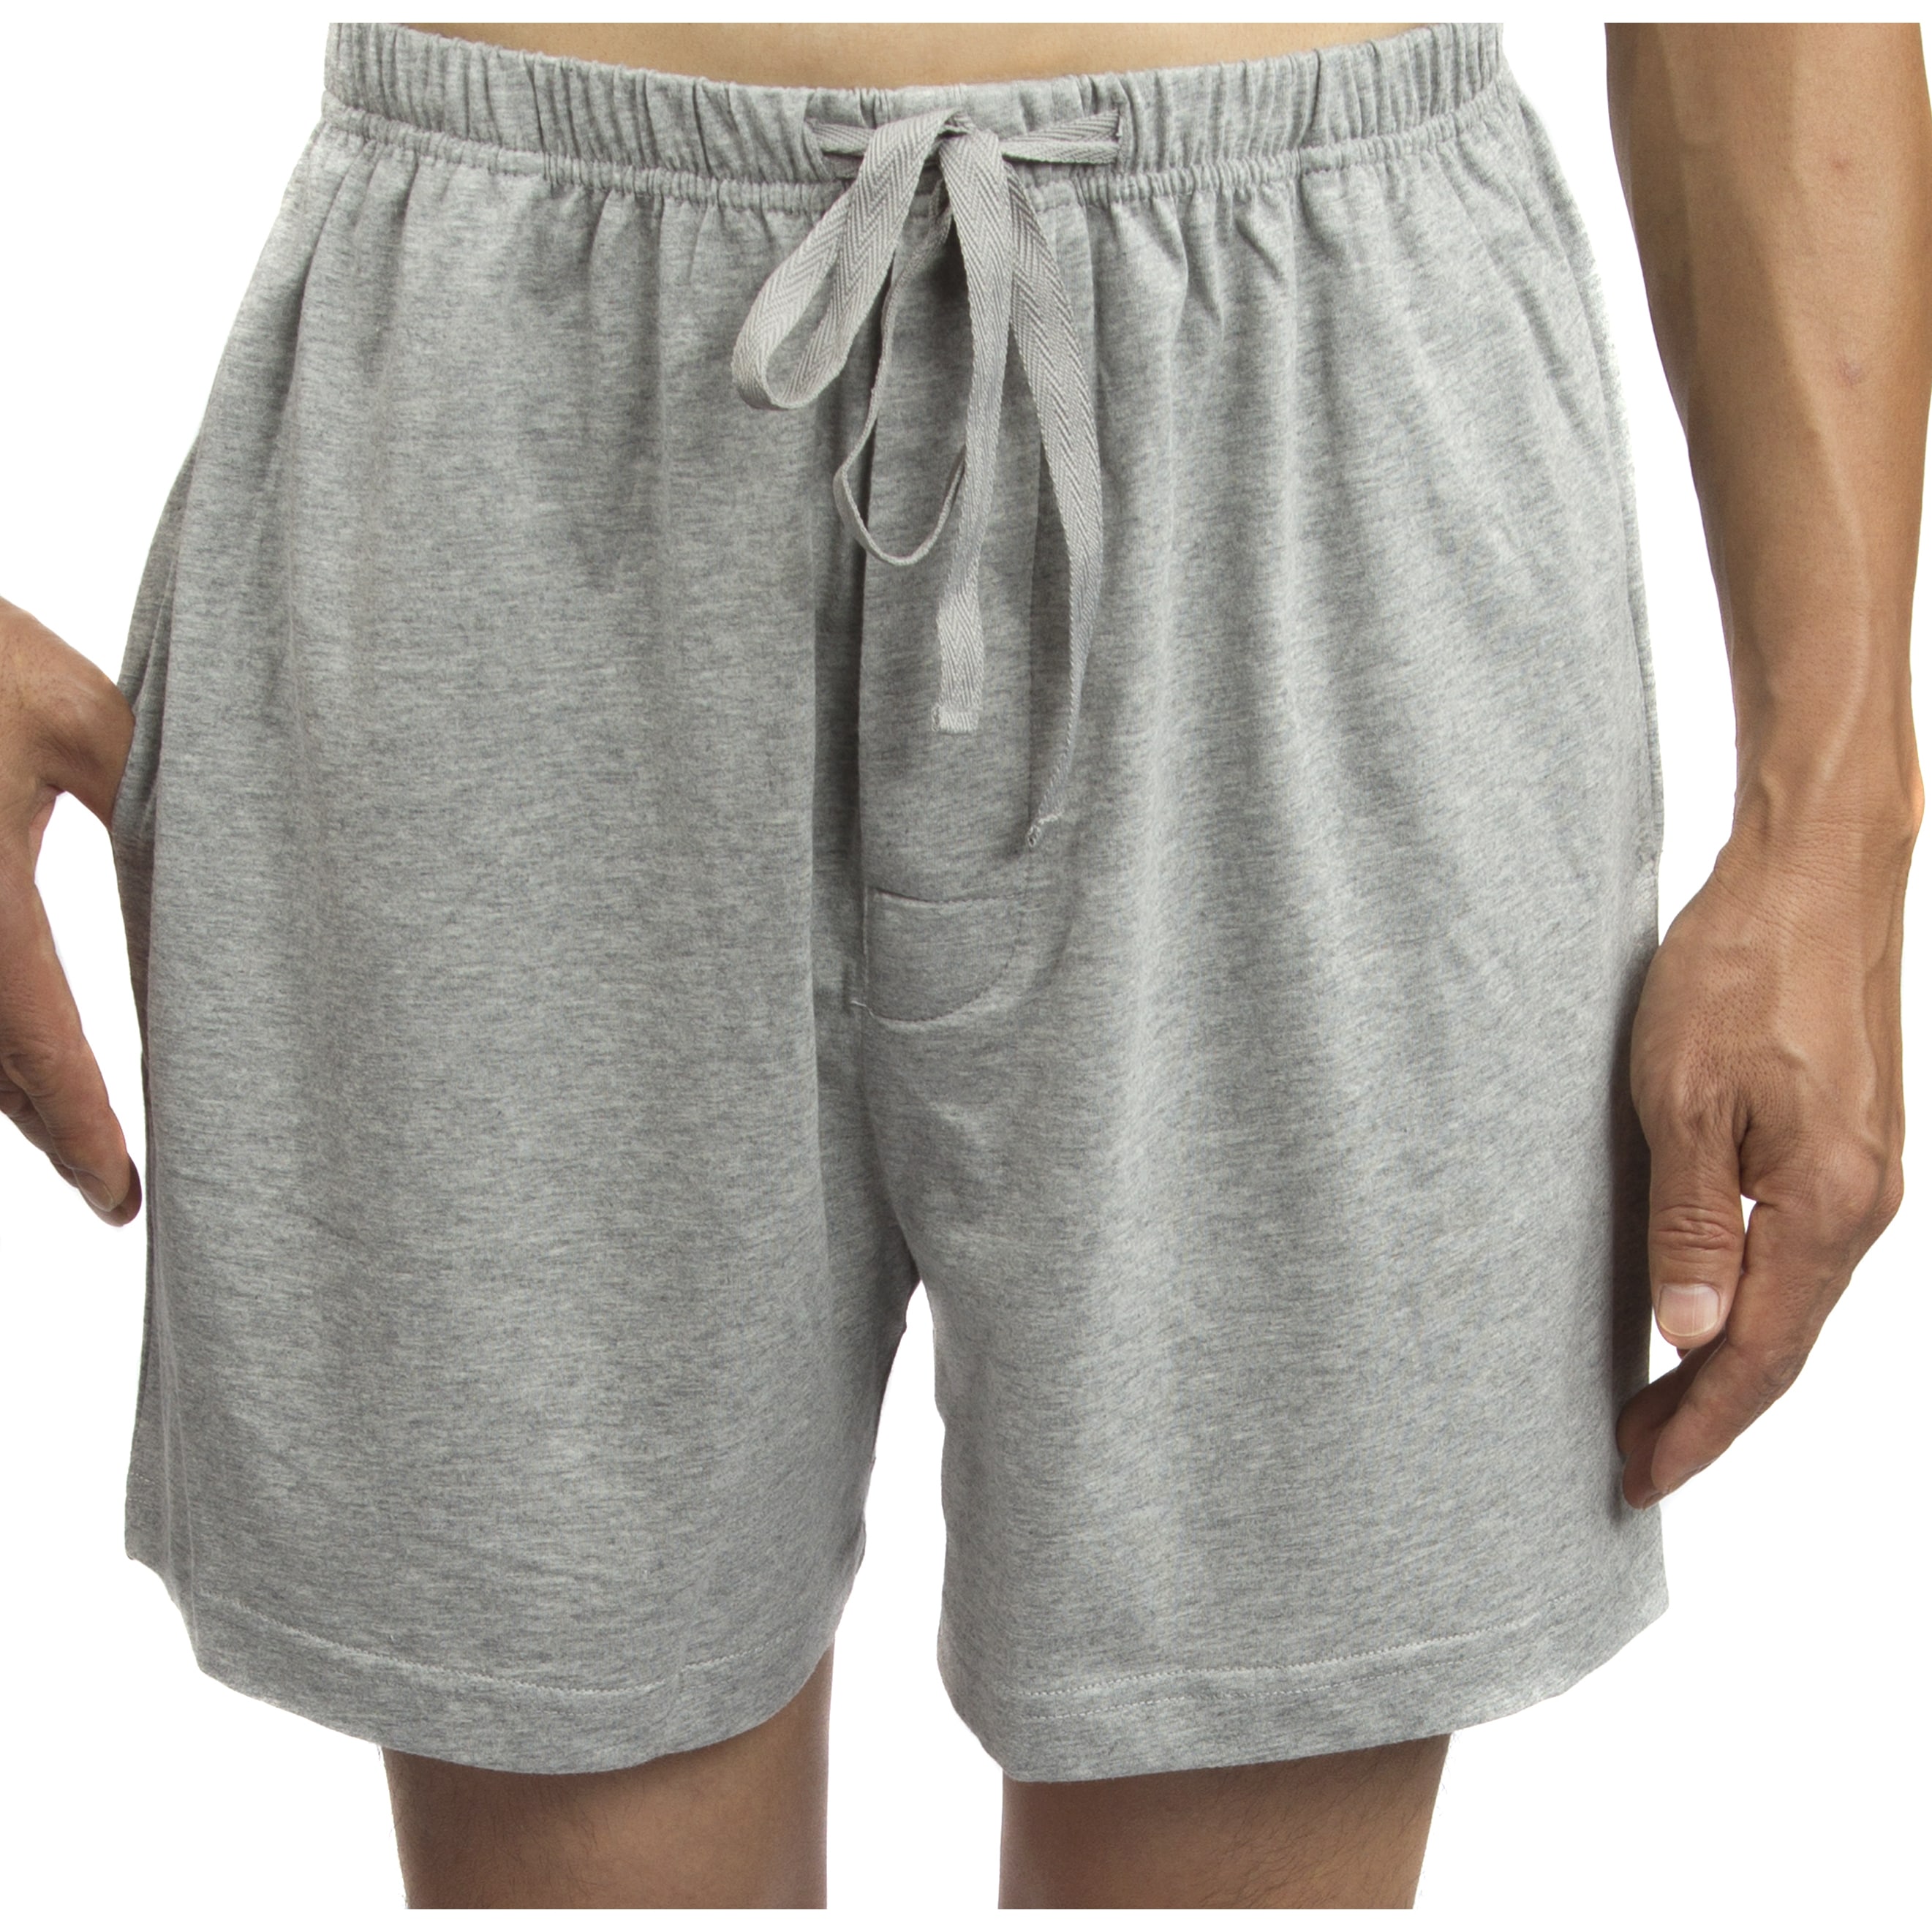 pajama shorts